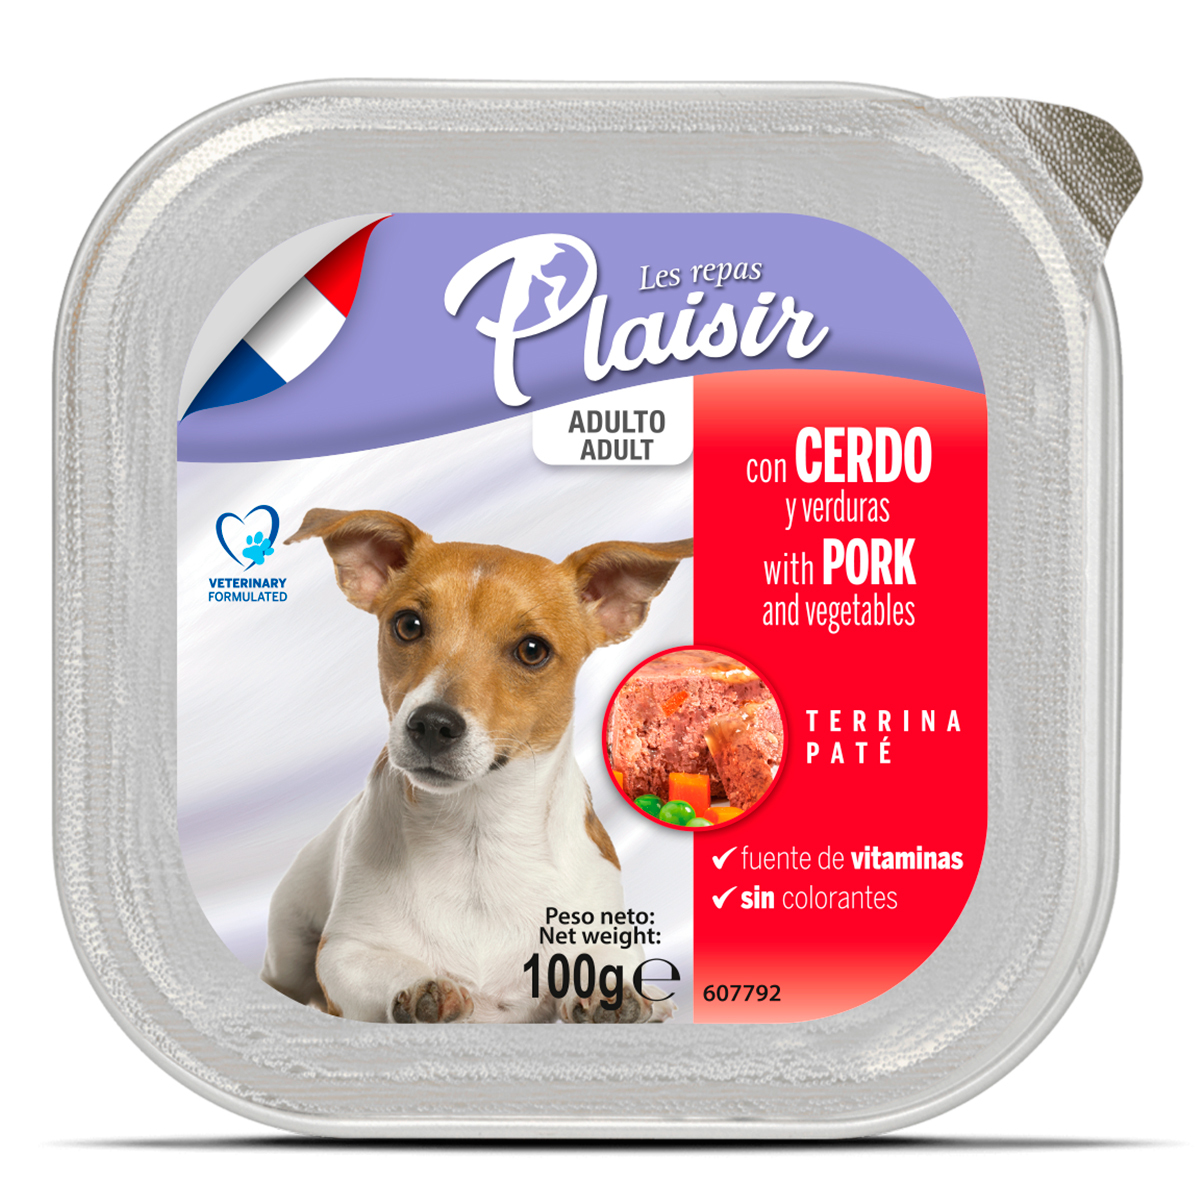 Les Repas Plaisir Paté Alimento Húmedo para Perro Adulto Receta Cerdo y Verduras, 100 g